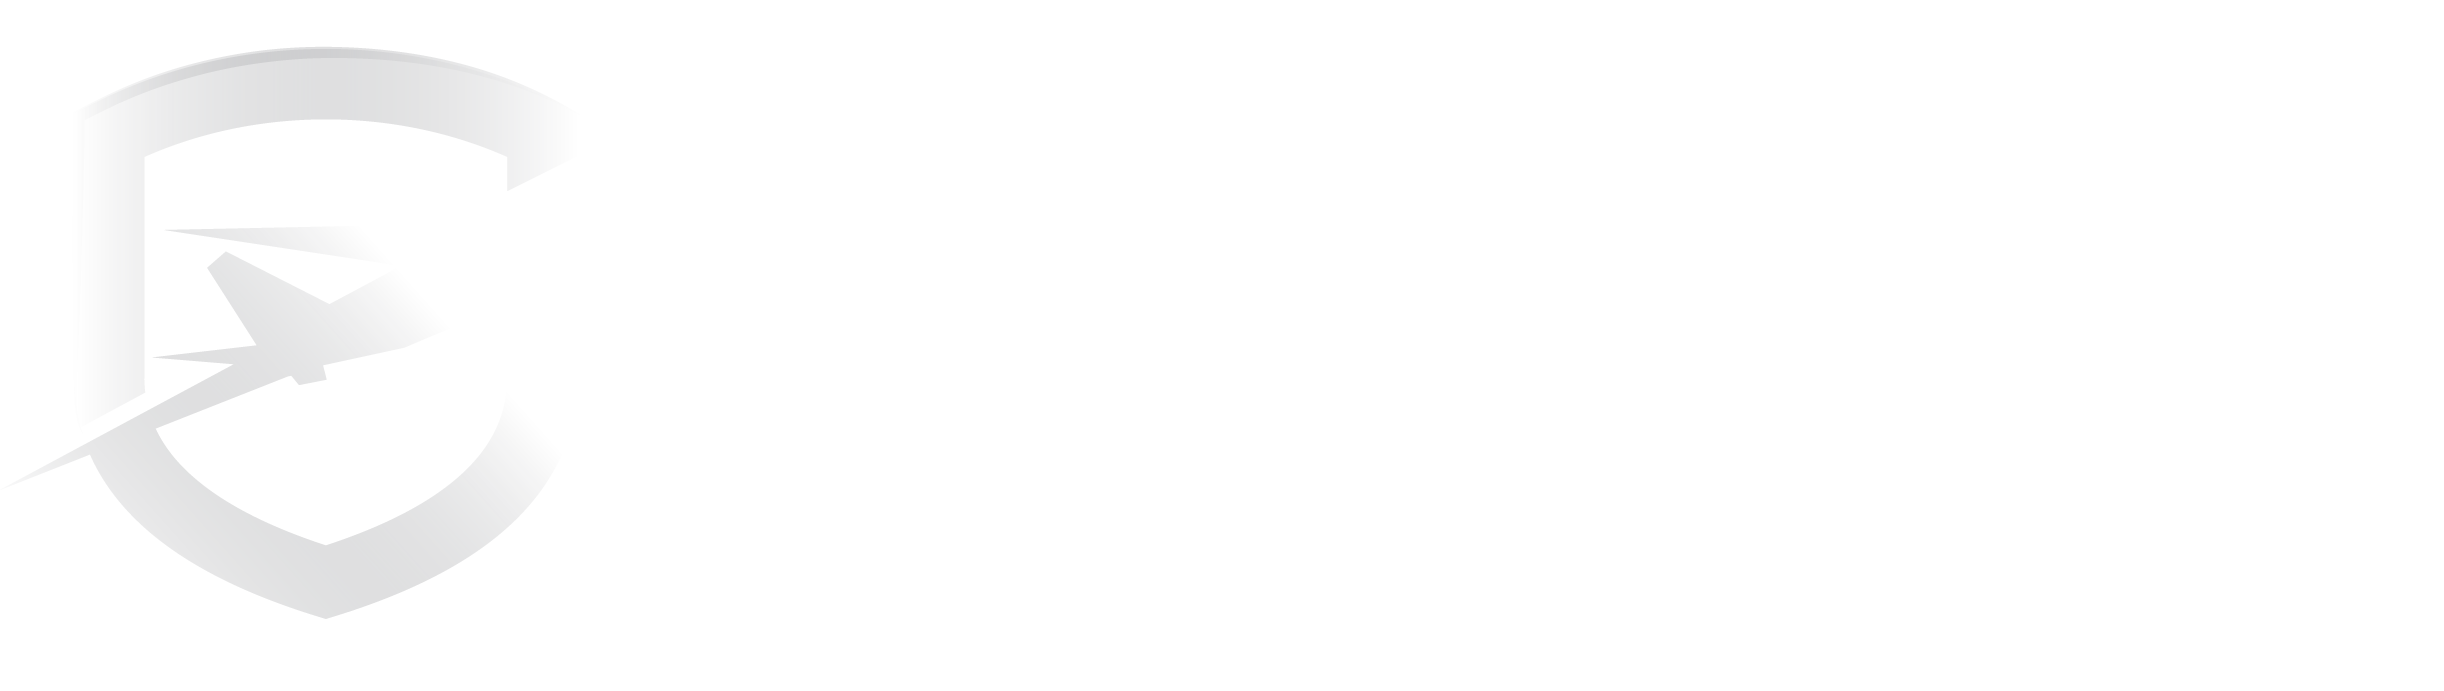 Logo Global Assistance Blanco png